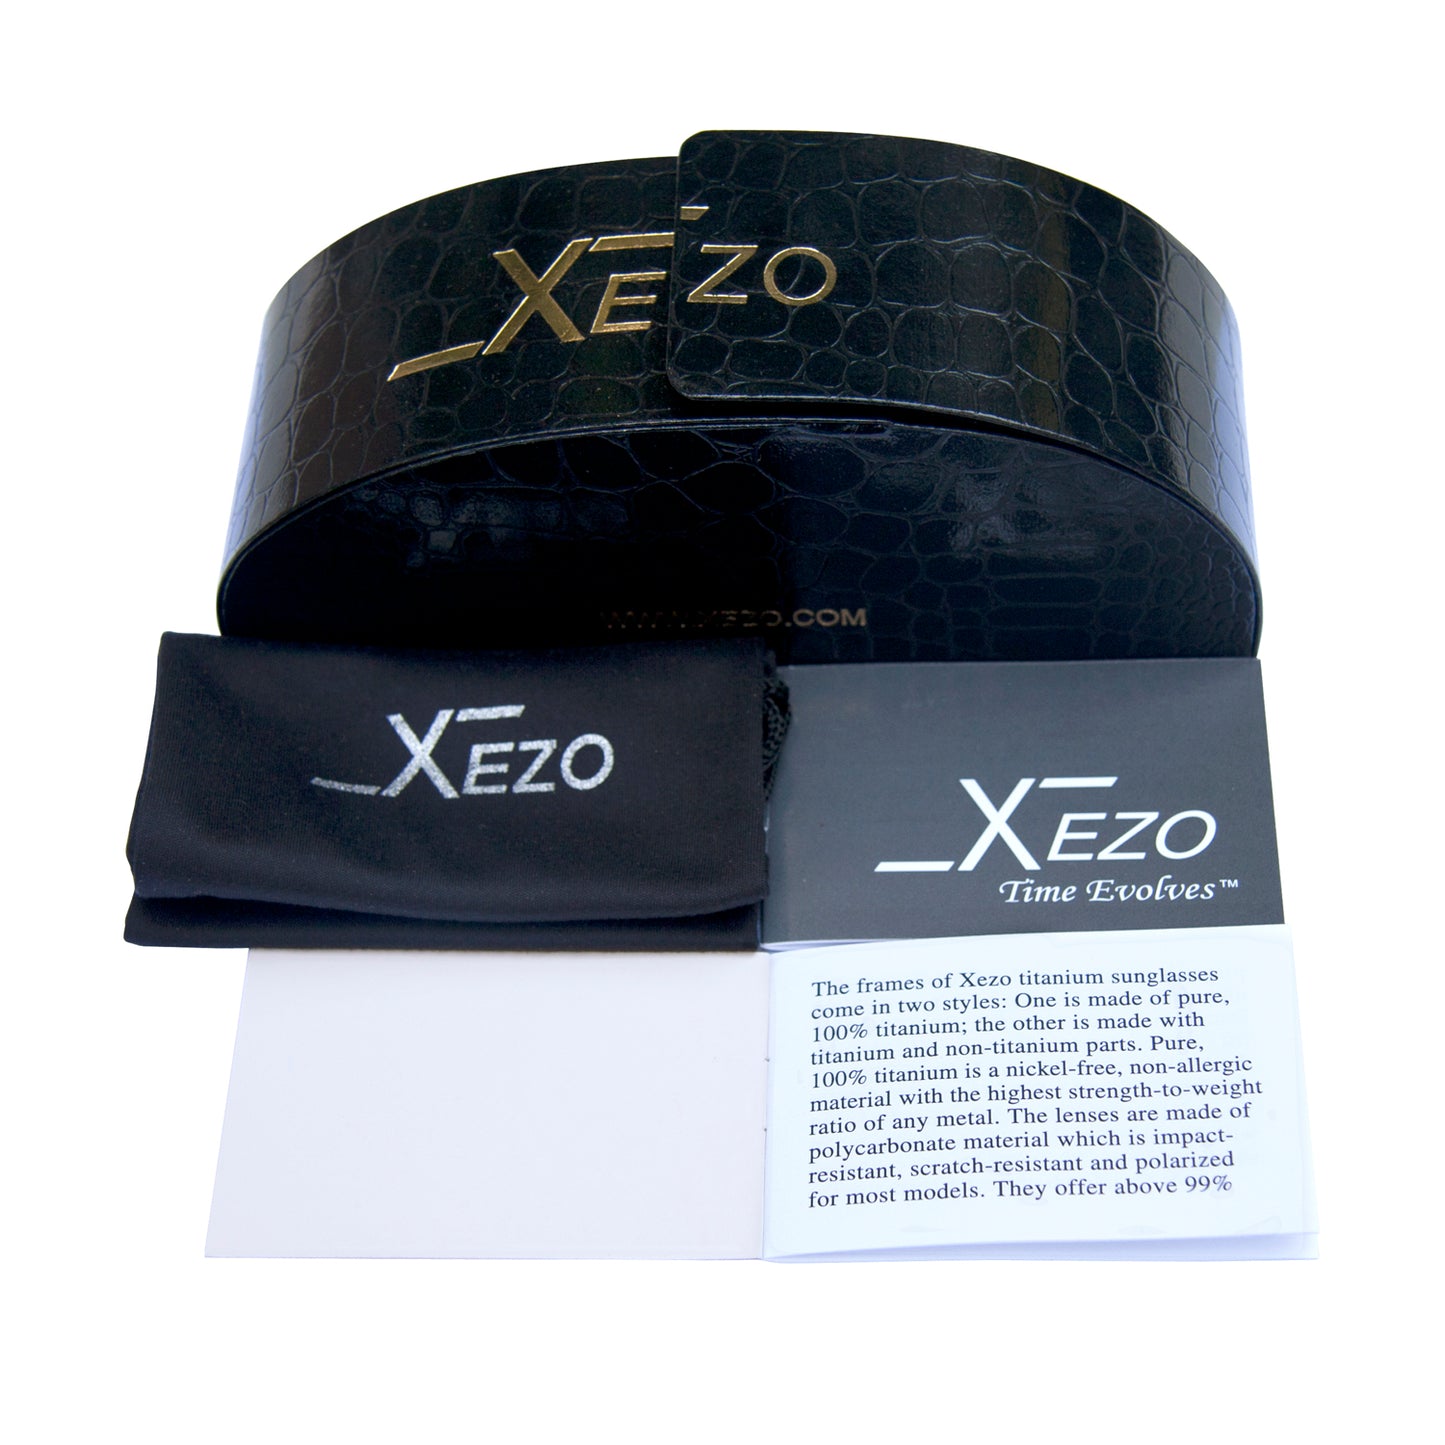 Xezo - Black gift box, black bag, and certificate of the Airman 2002 B sunglasses